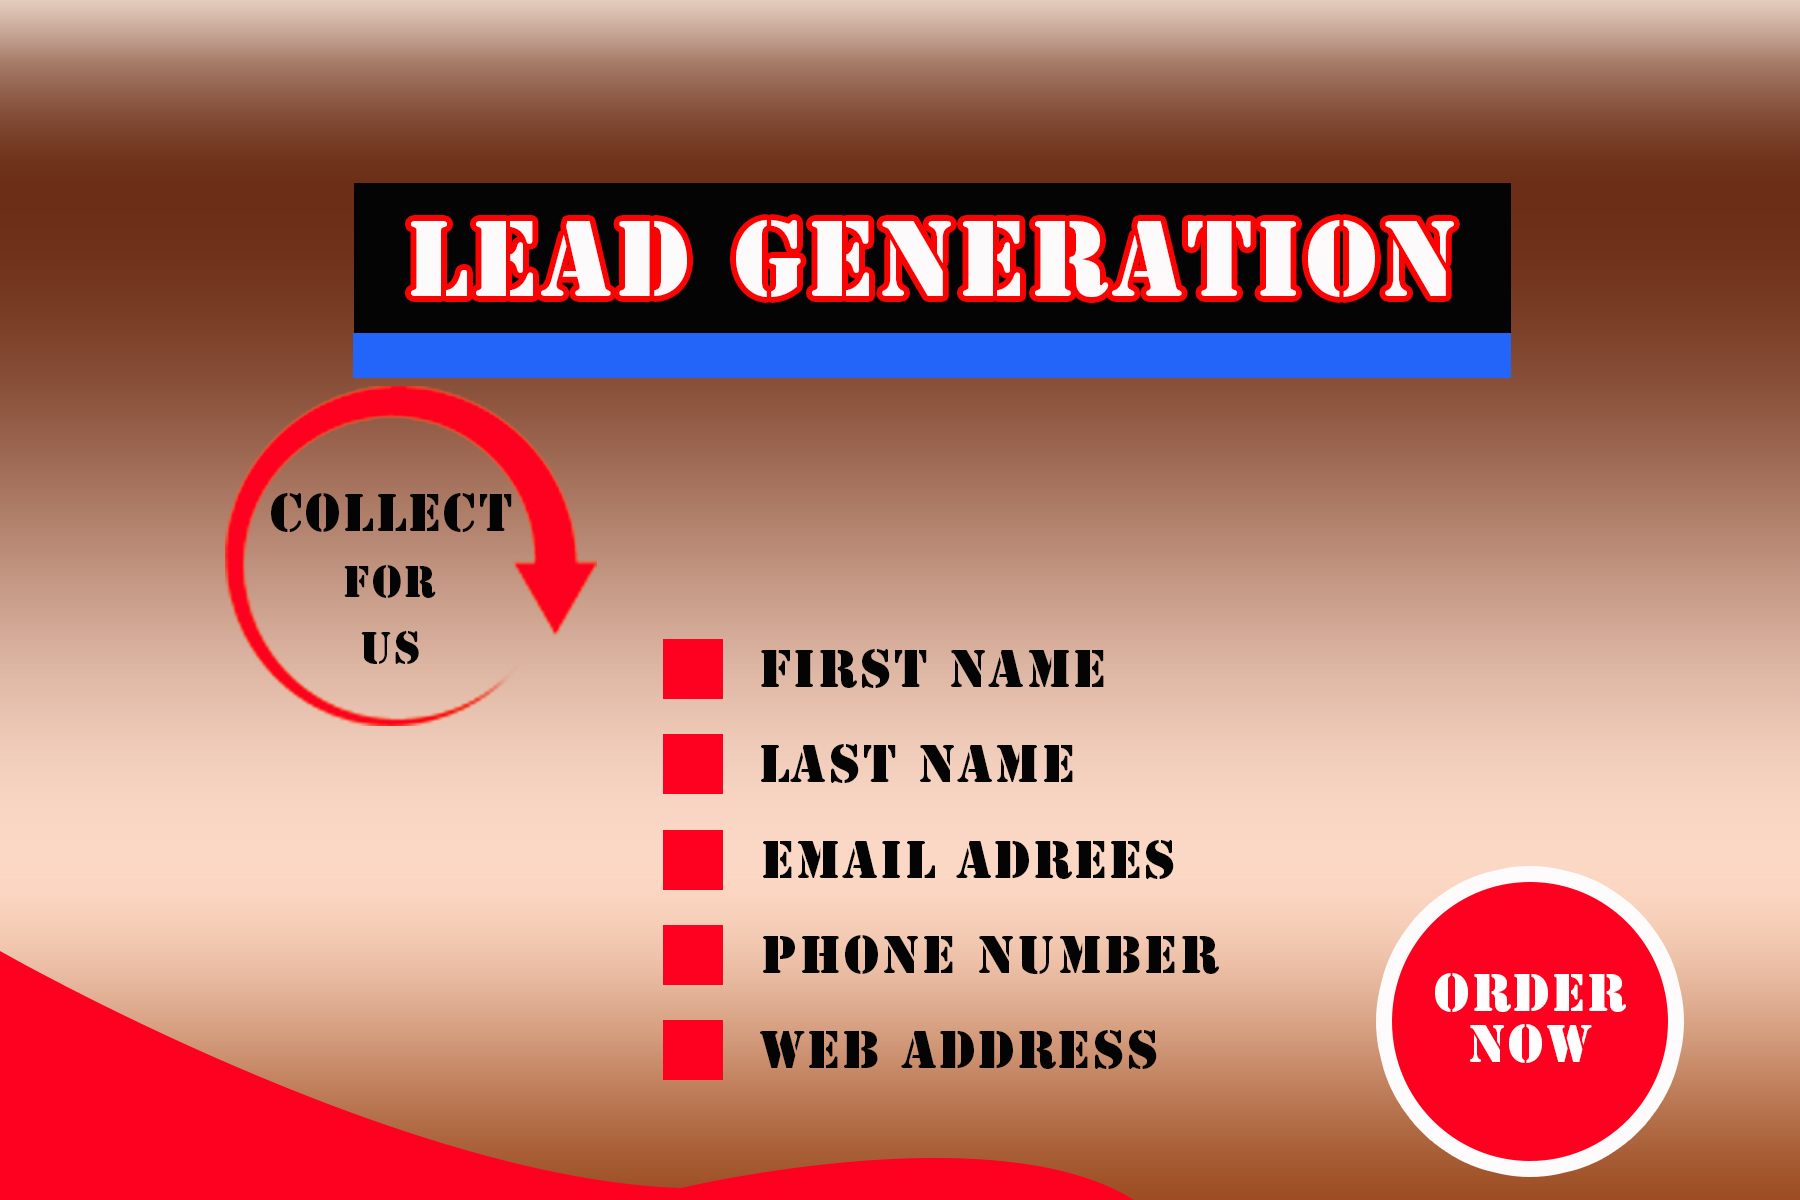 Create B2B Lead Generation, email address by using LinkedIn